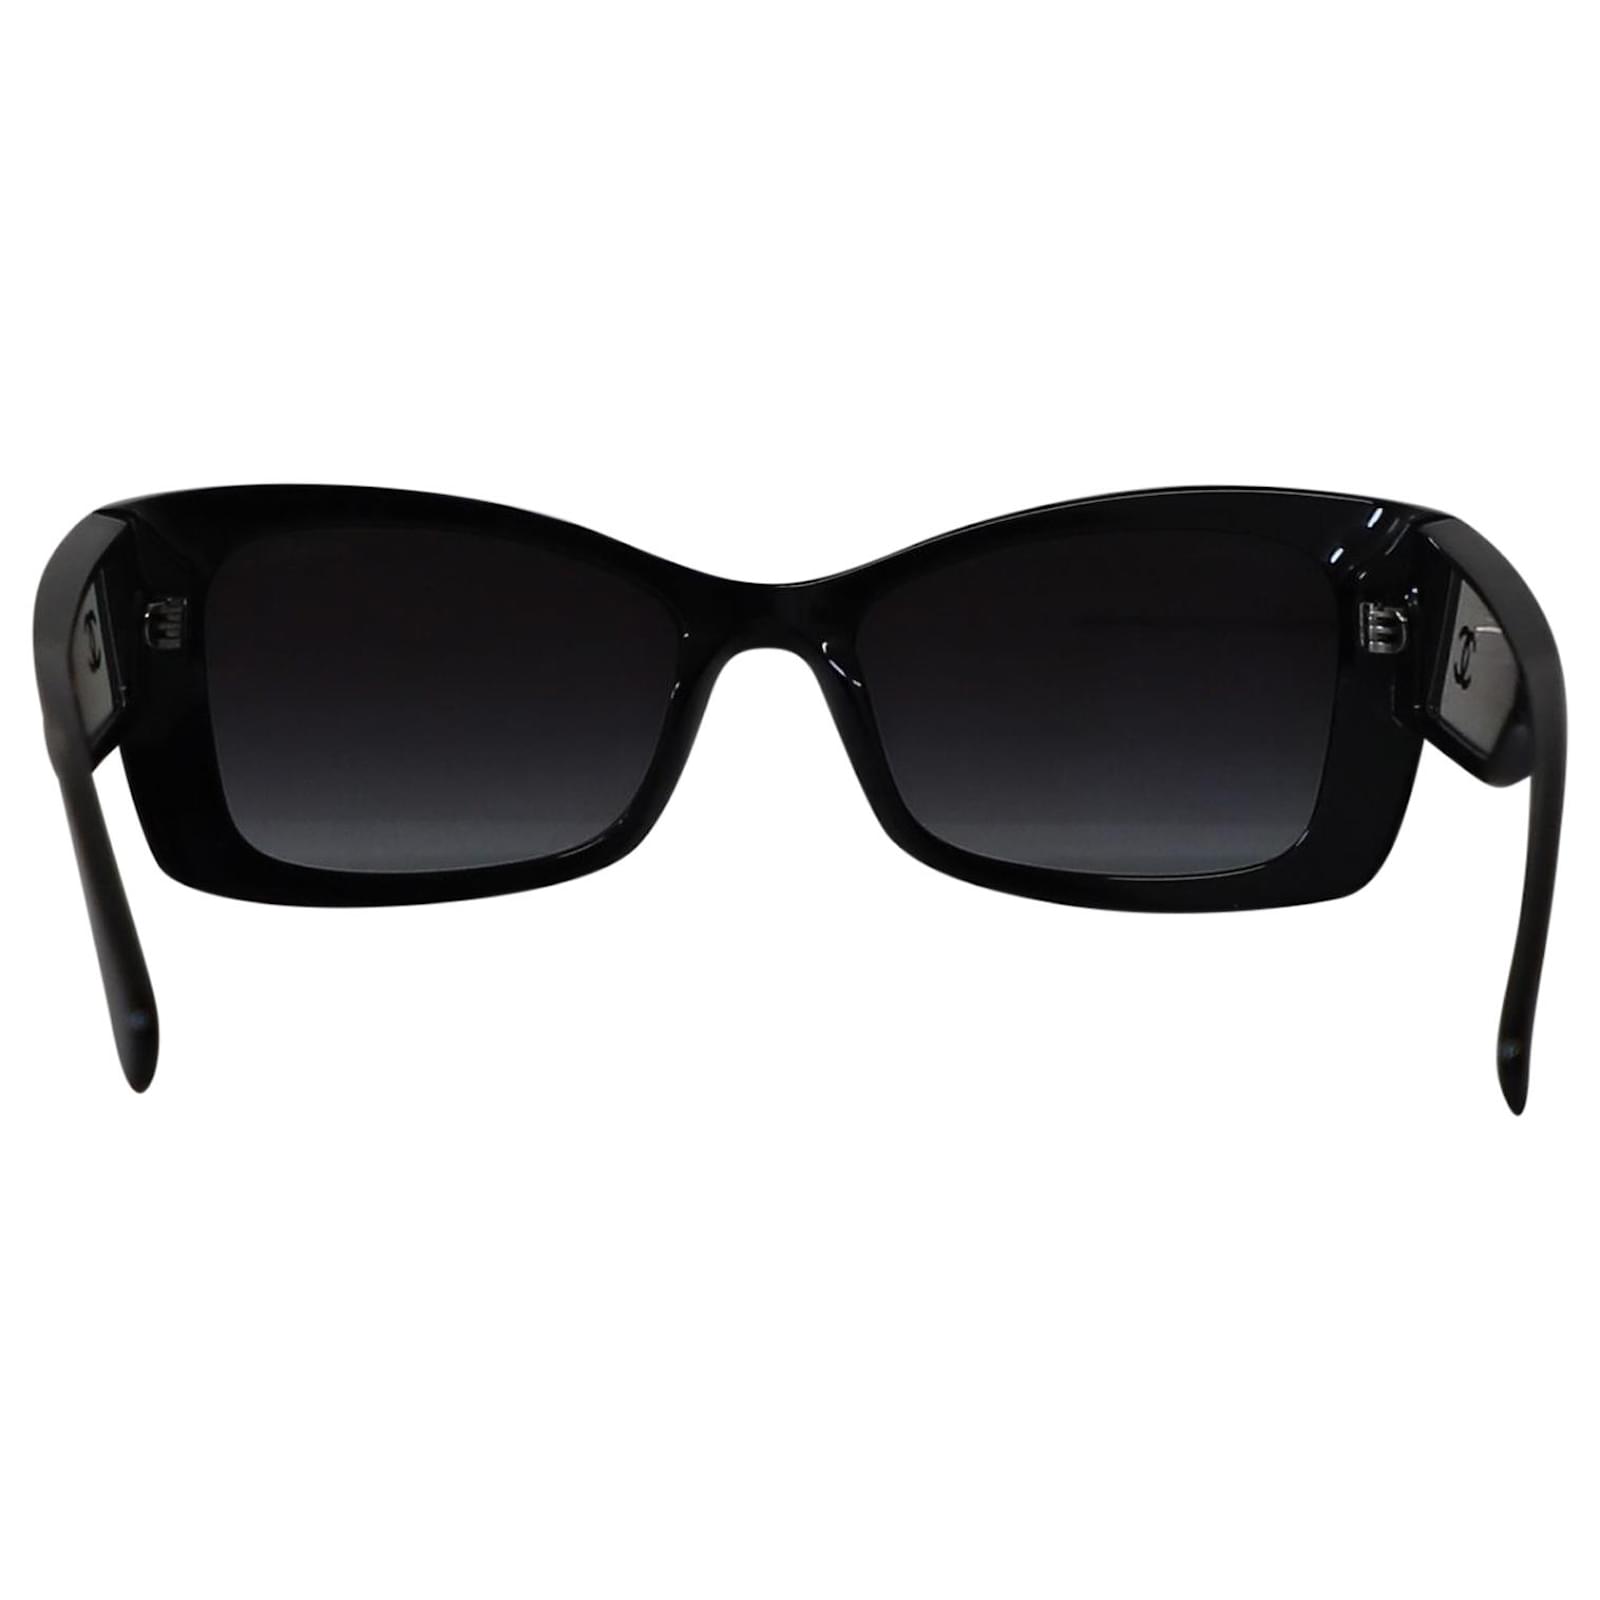 Chanel - Rectangle Sunglasses - Black Gray - Chanel Eyewear - Avvenice